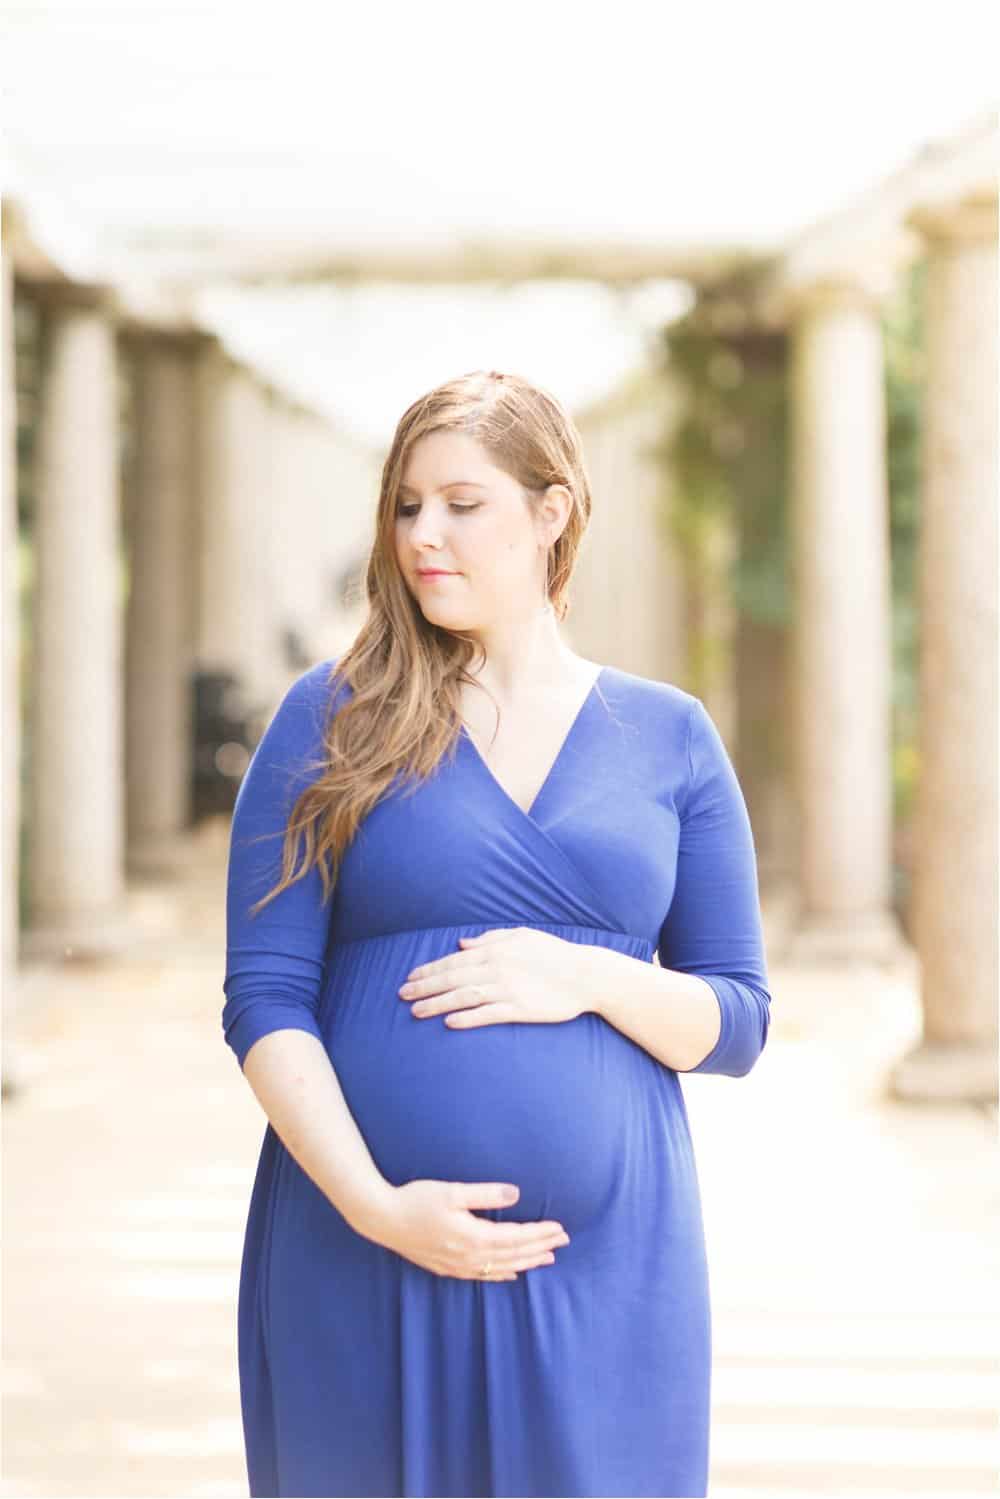 maymont park richmond virginia maternity photos